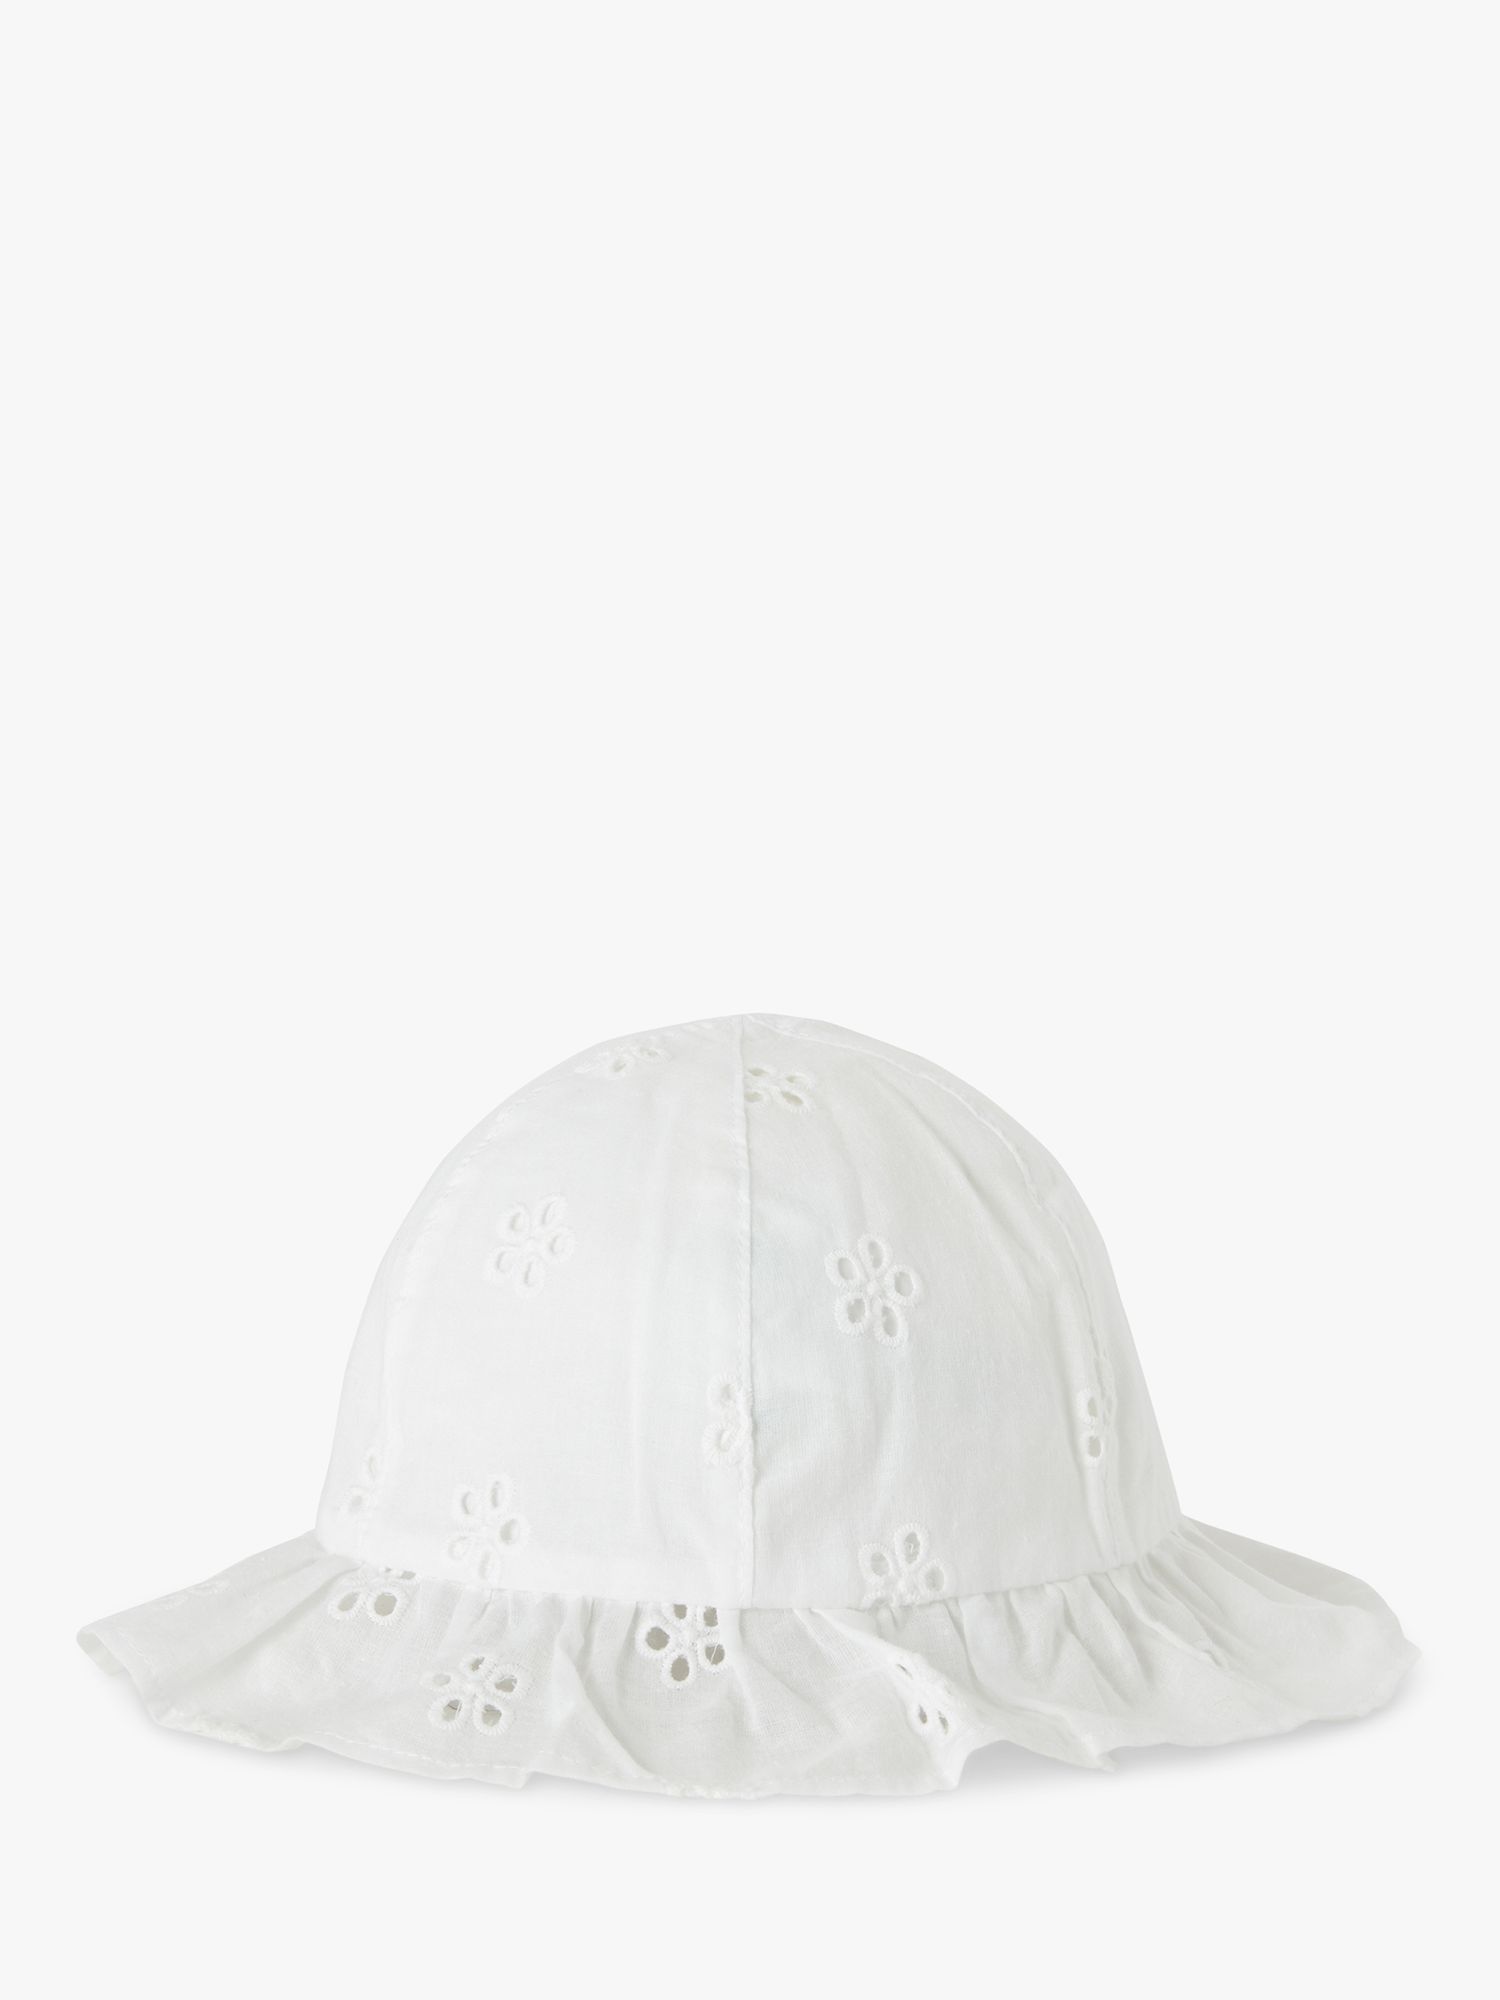 Benetton Baby Broderie Anglaise Sun Hat, Optical White, XXS